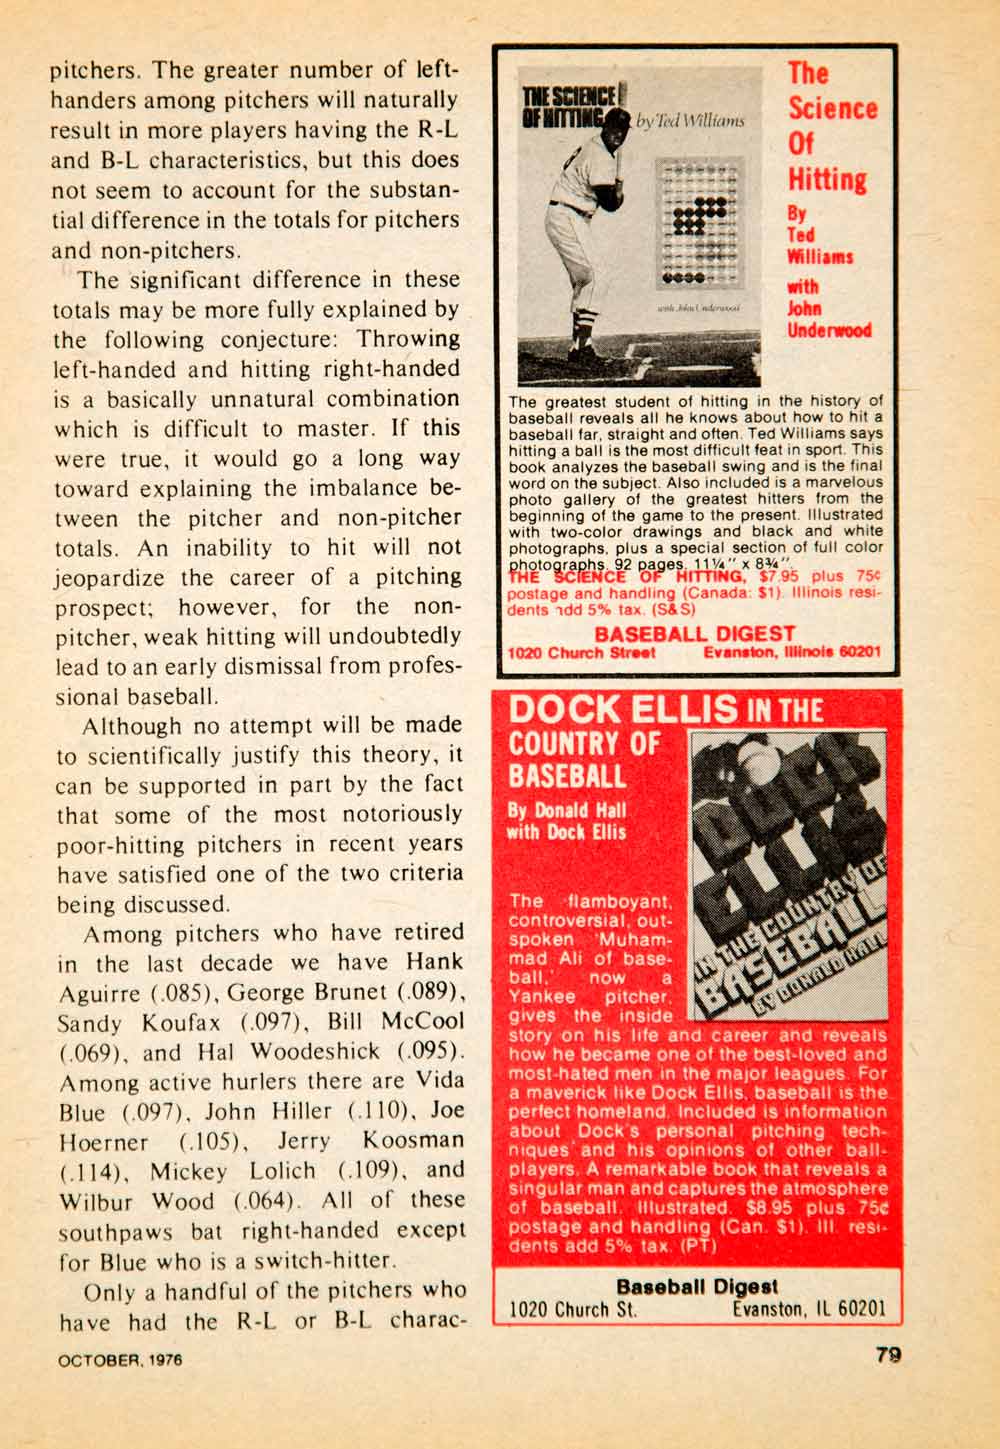 1976 Article MLB Baseball Sports Memorabilia Cleon Jones Chicago White Sox YBD1